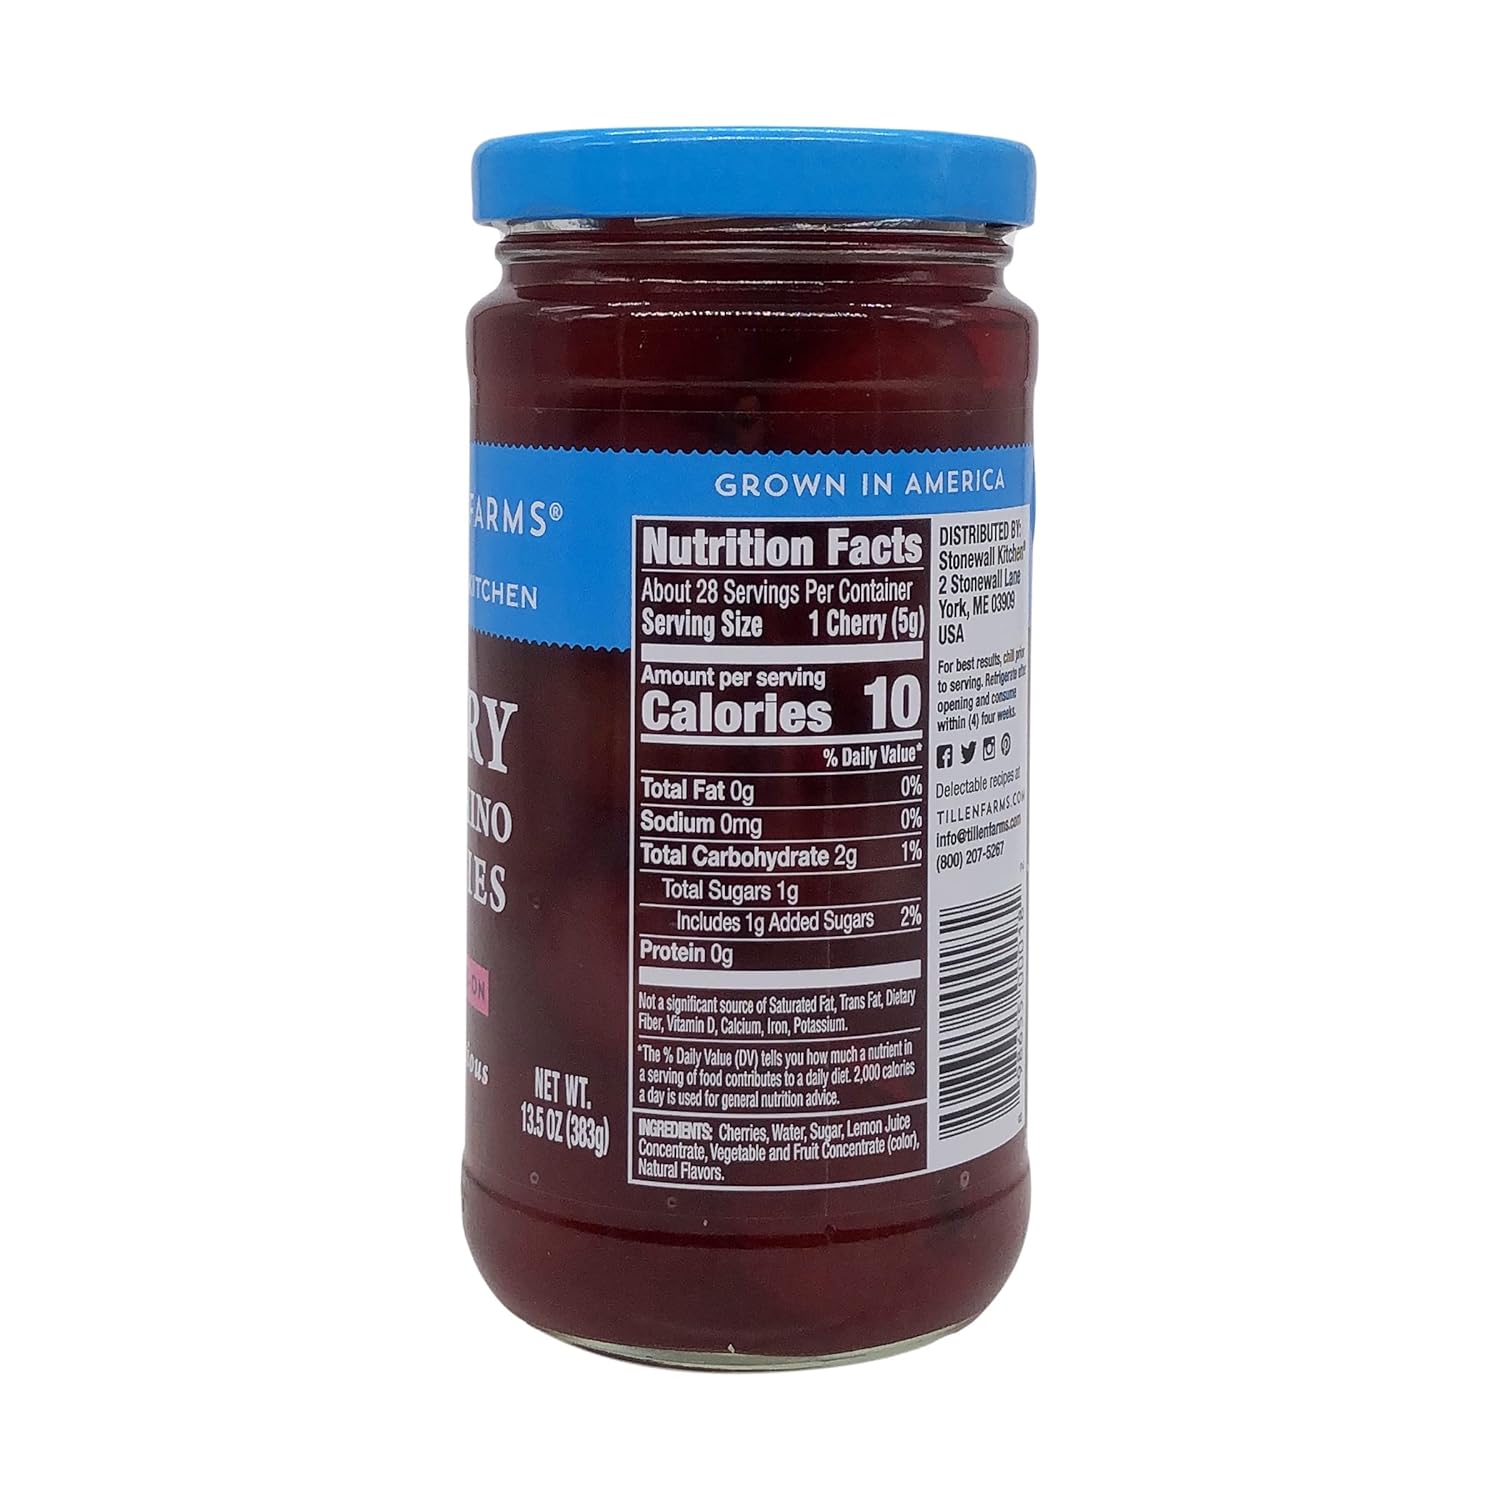 Tillen Farms Maraschino Cherries, 13.5 oz : Canned And Jarred Cherries : Grocery & Gourmet Food